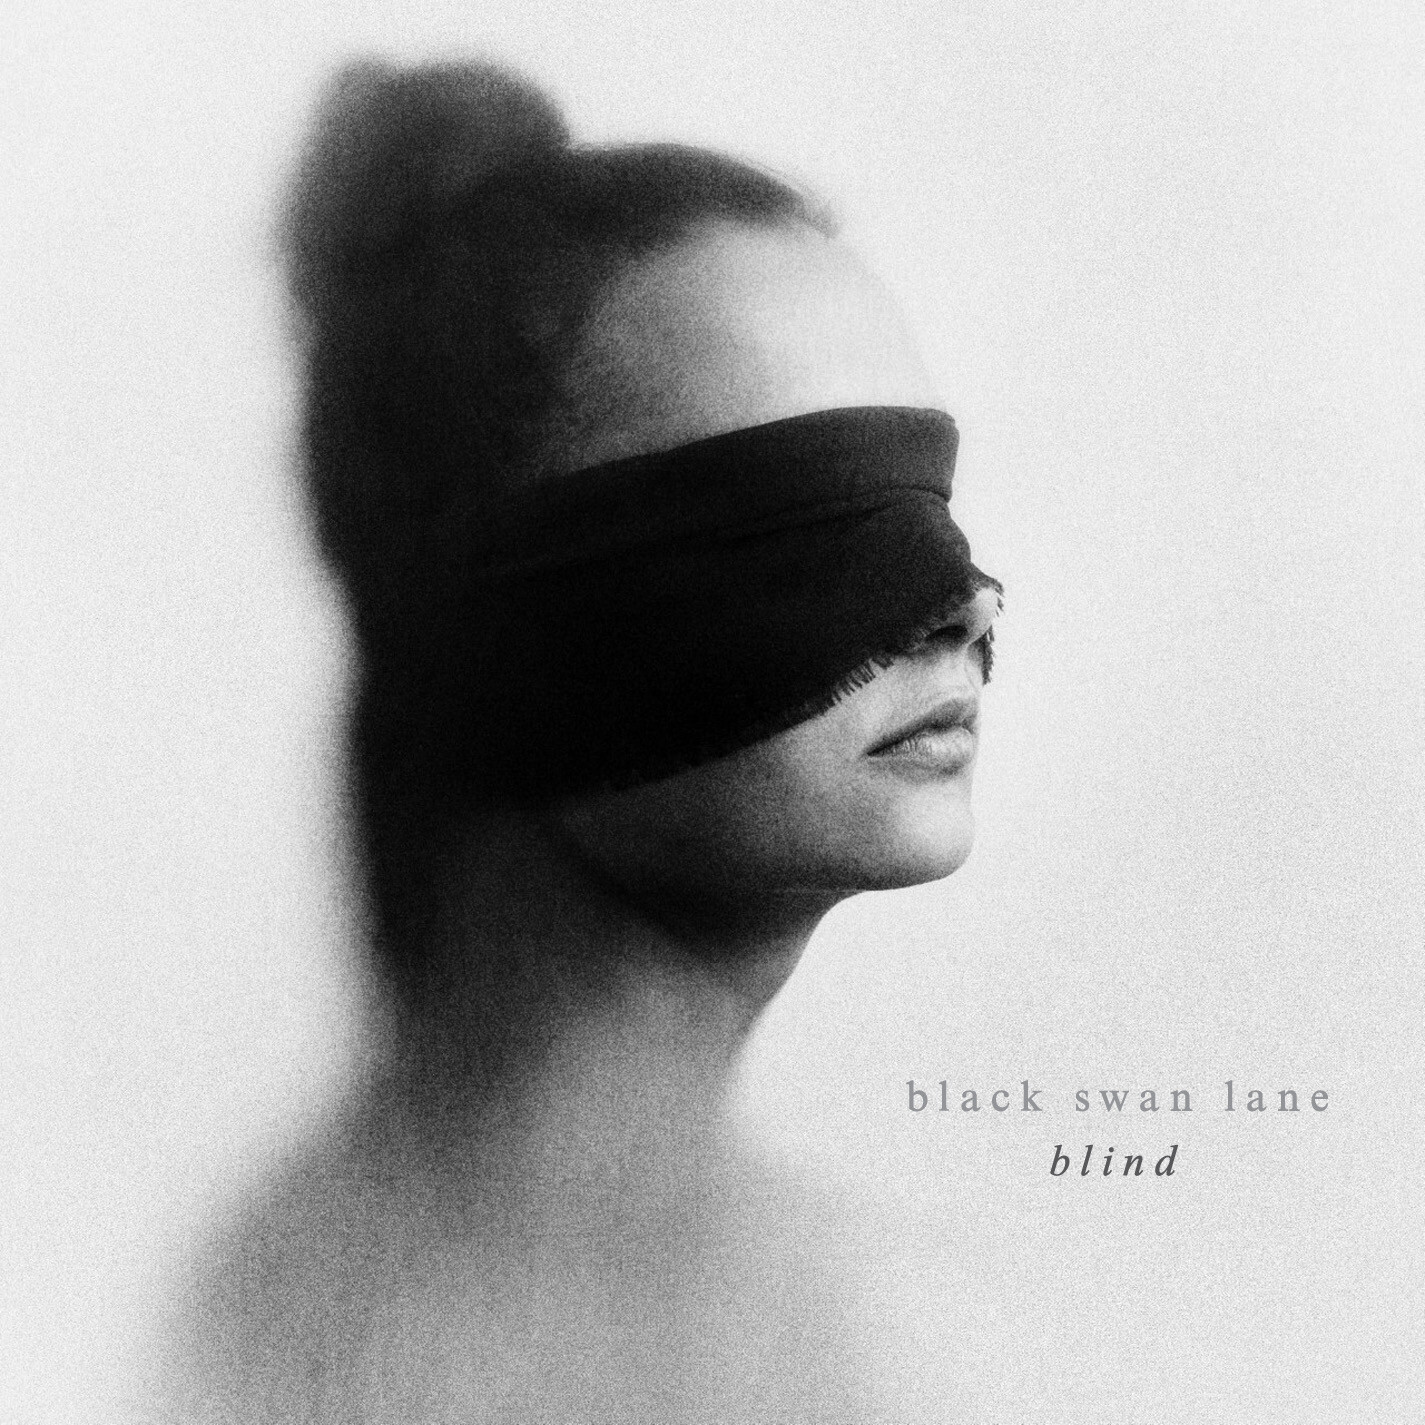 Black Swan Lane – "Blind"